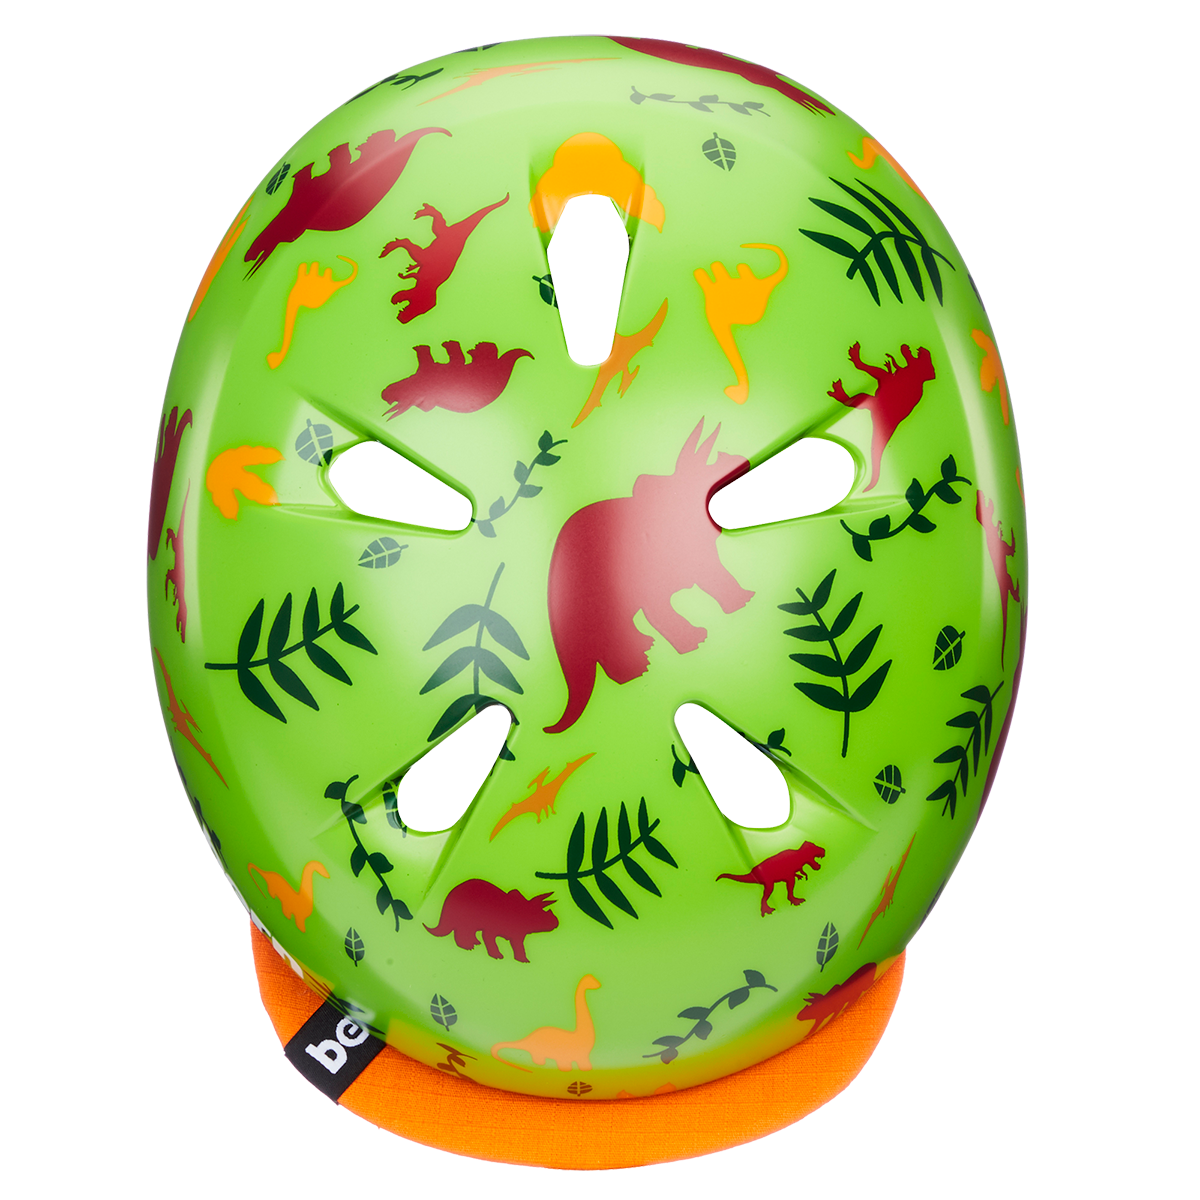 BERN - Tigre Satin Green Dino Kids Helmet